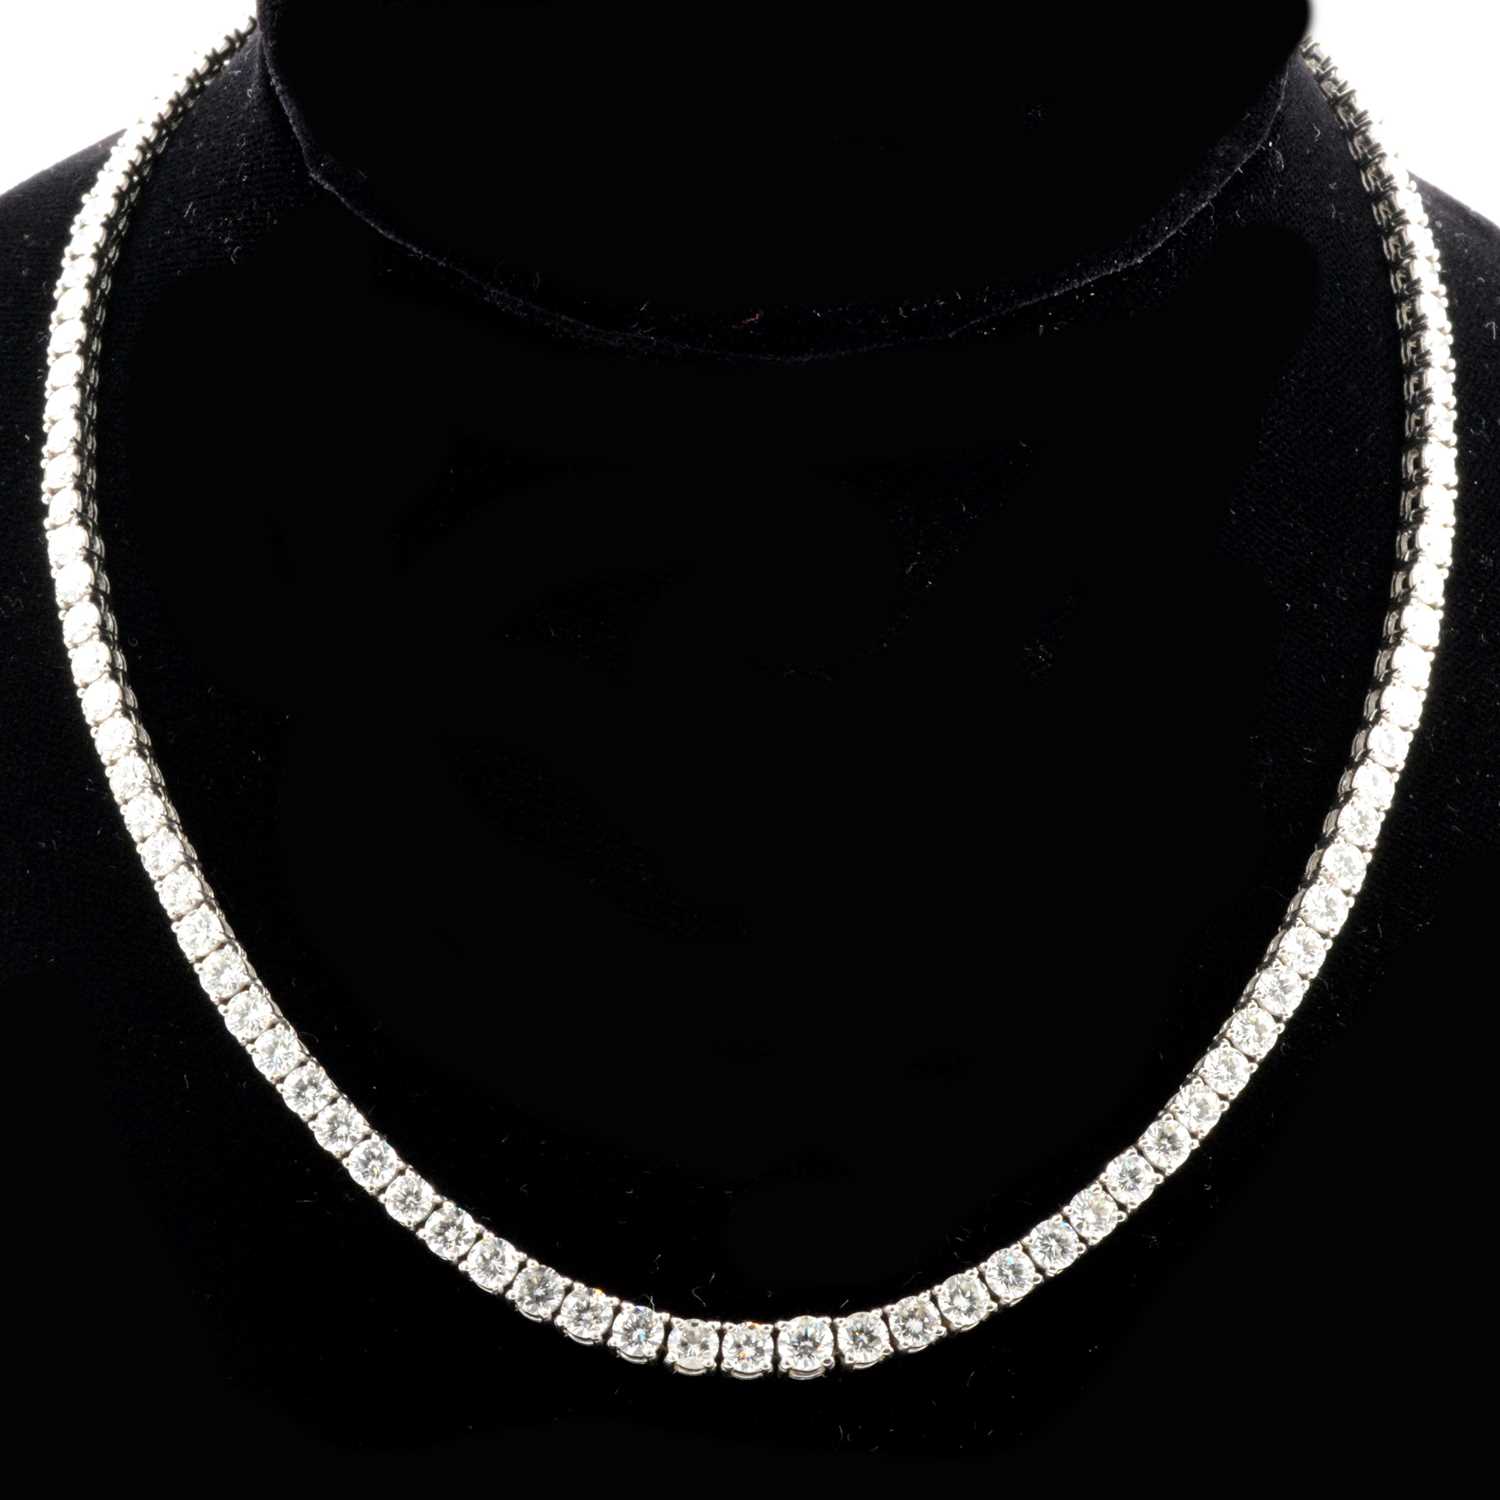 Lot 201 - A diamond Riviere necklace, approximately 20 carats.